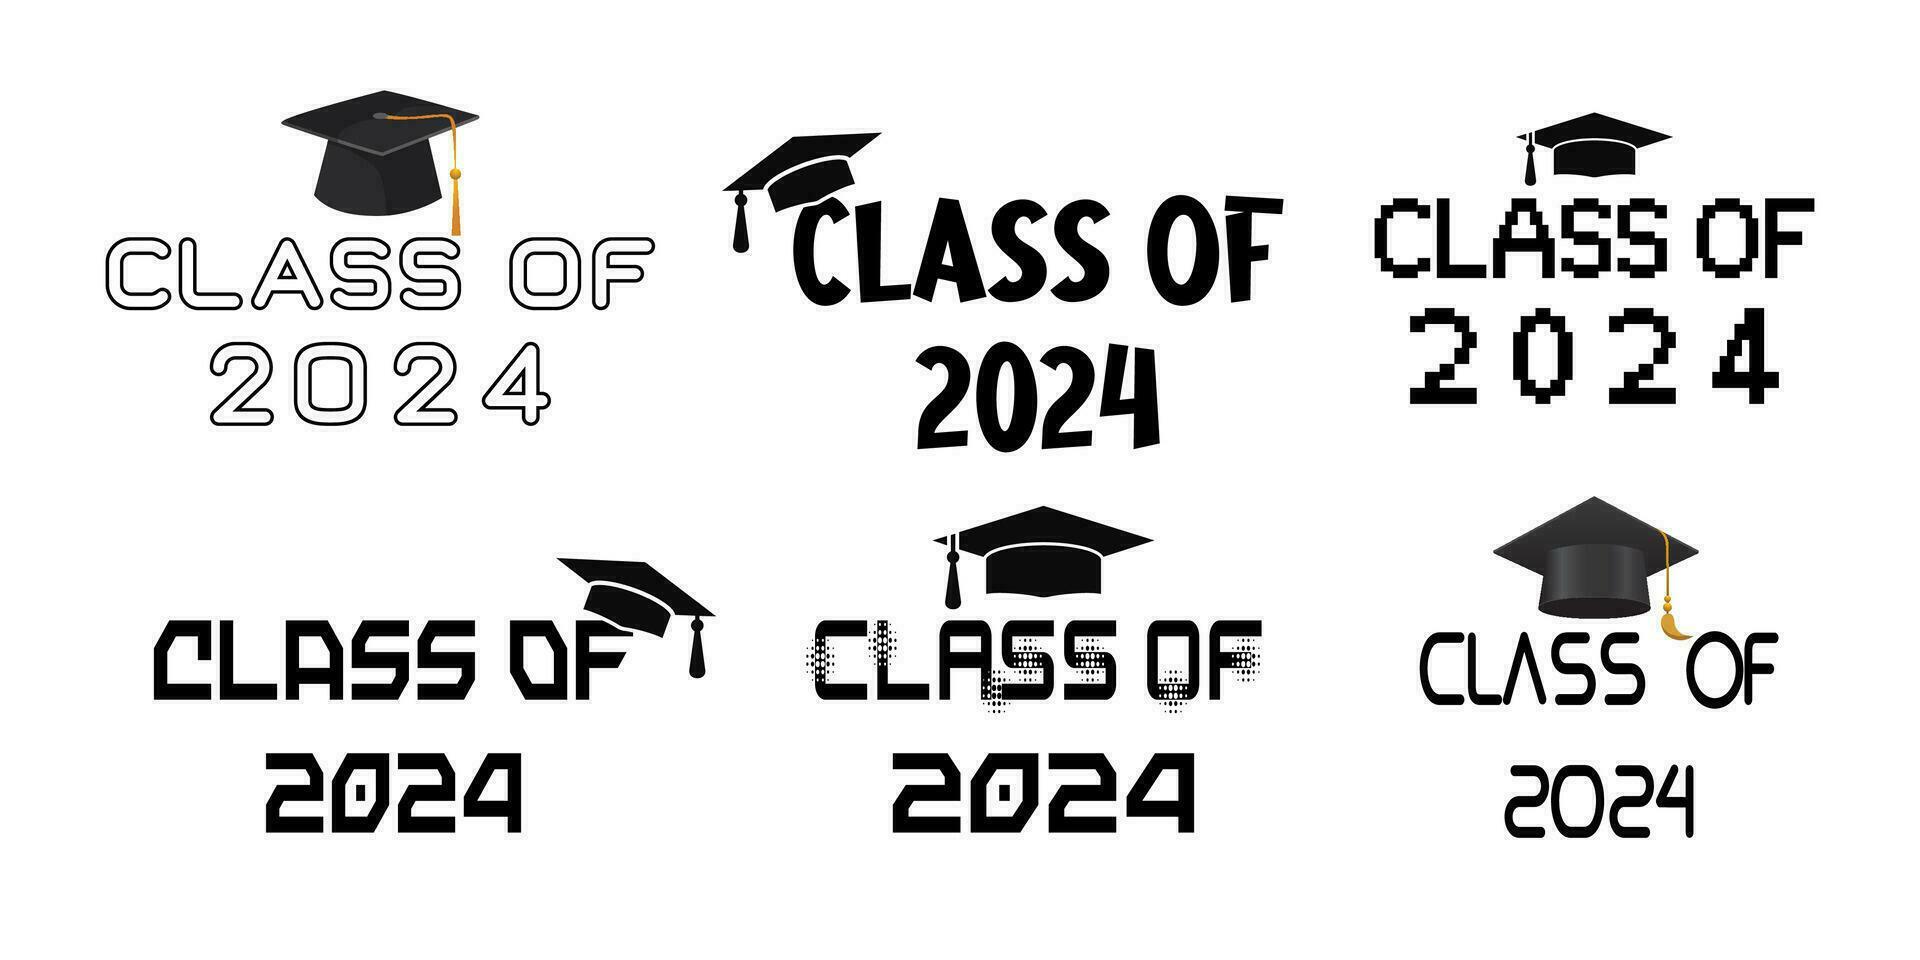 Class of 2024 Graduation Date Is Set!